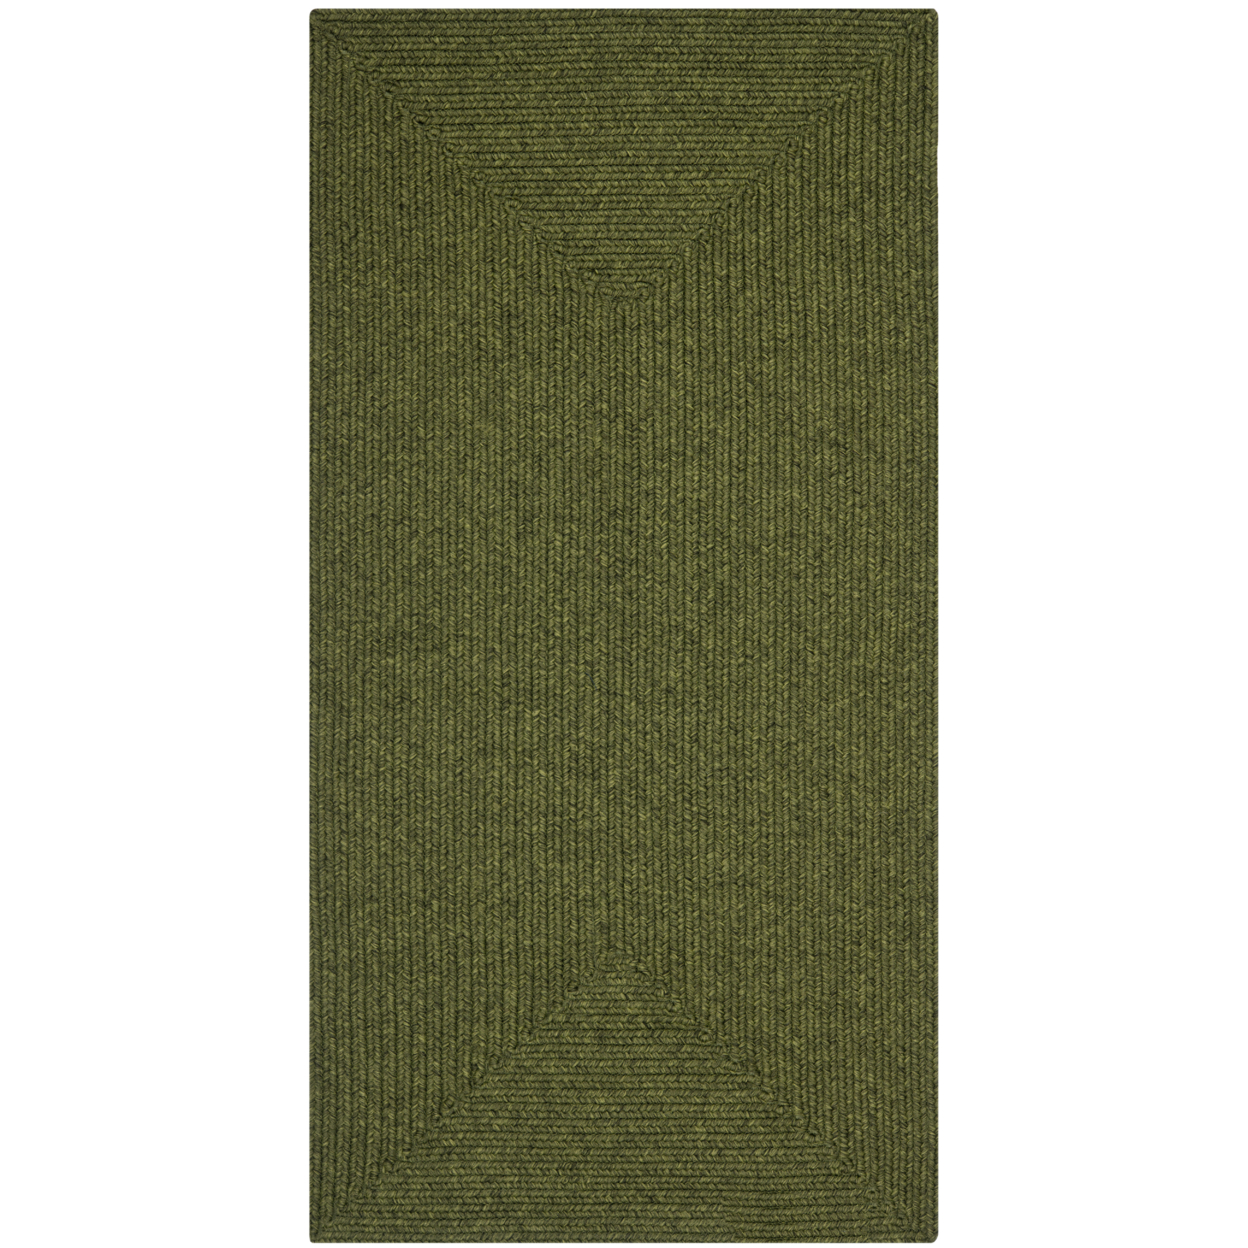 SAFAVIEH Braided Rishika Solid Area Rug, Green, 5' x 8' Oval - image 4 of 10